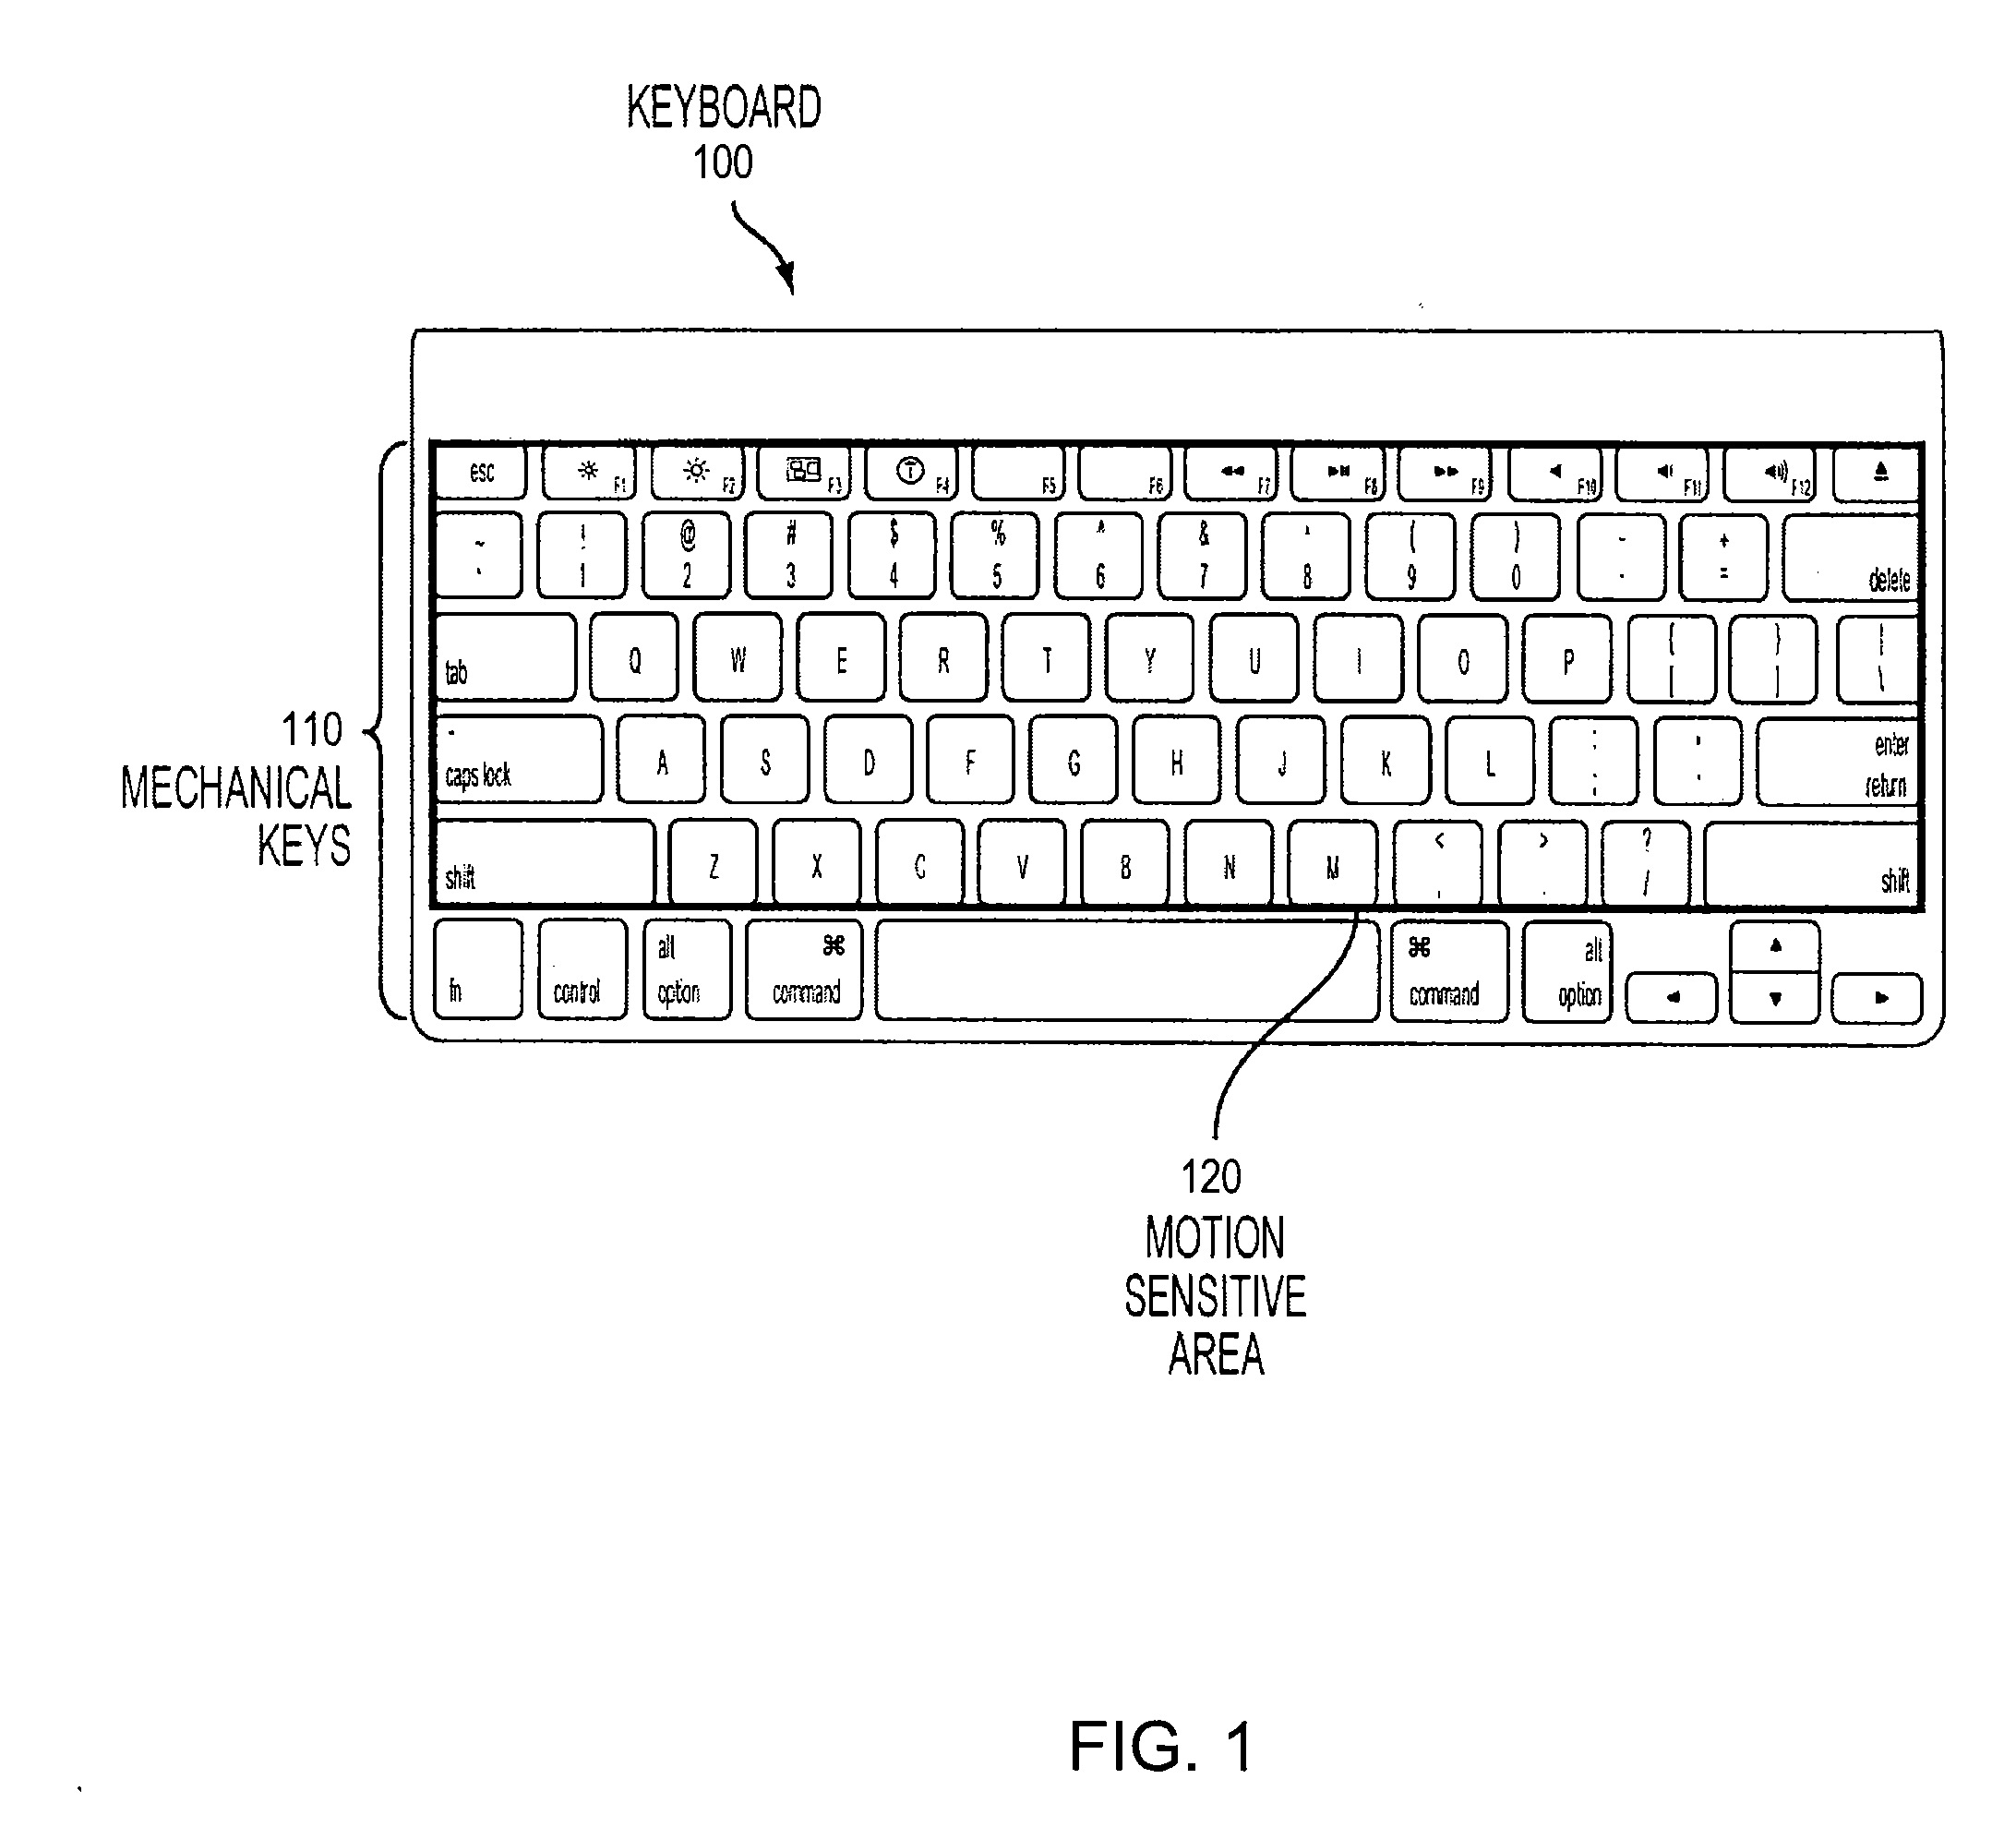 Motion sensitive mechanical keyboard